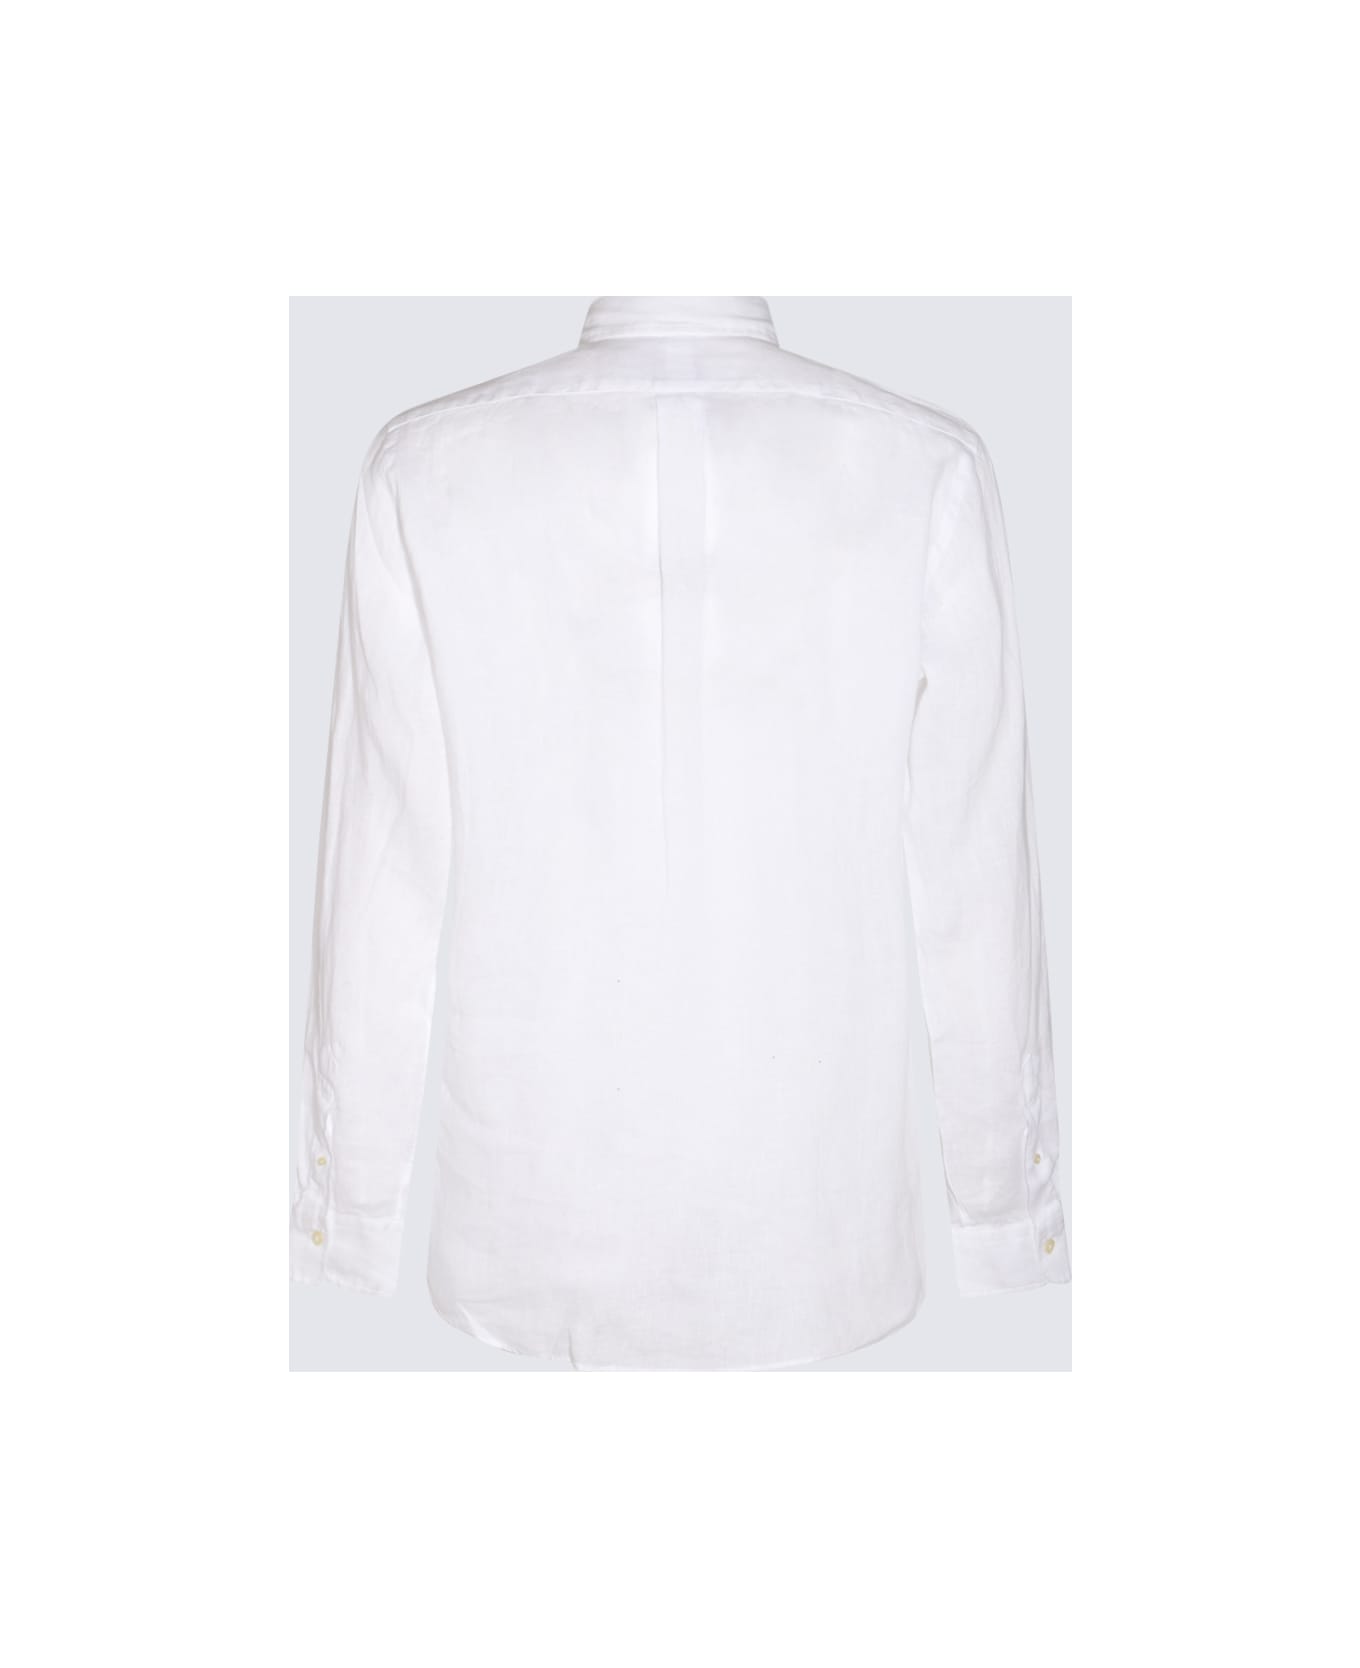 Polo Ralph Lauren White And Blue Linen Shirt - White シャツ